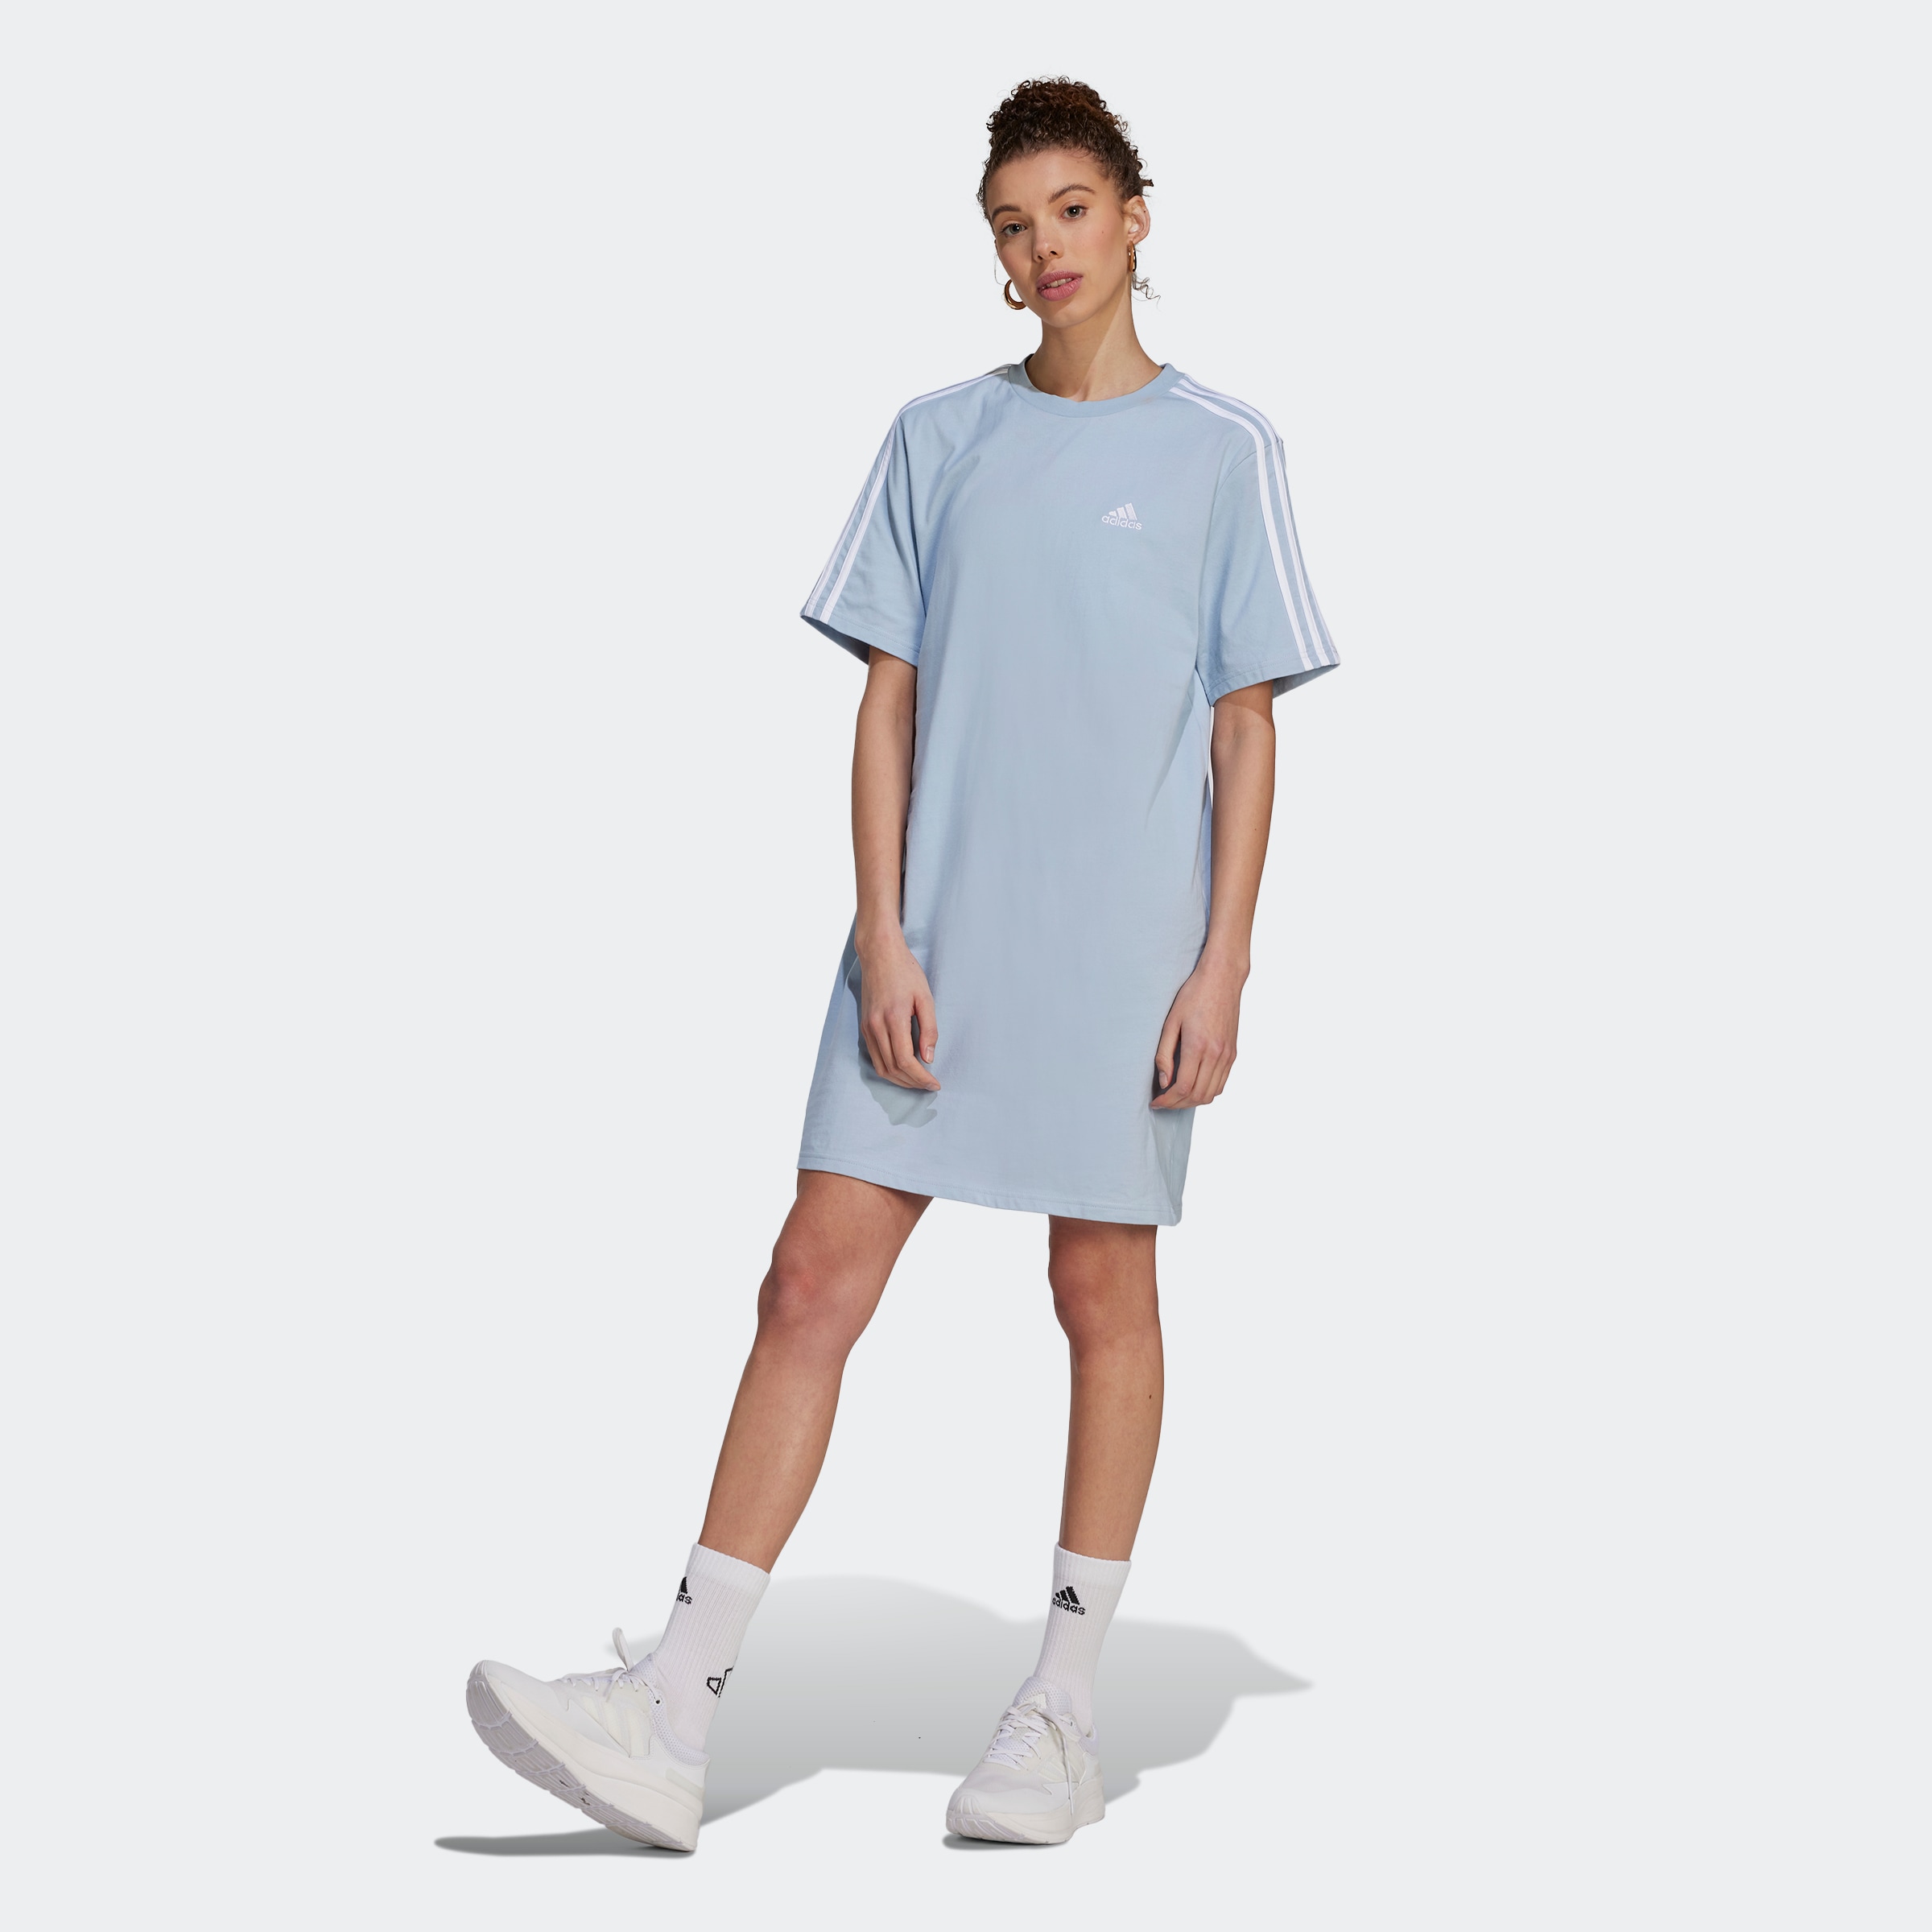 »W Shirtkleid Sportswear | für BAUR DR« 3S adidas BF kaufen T